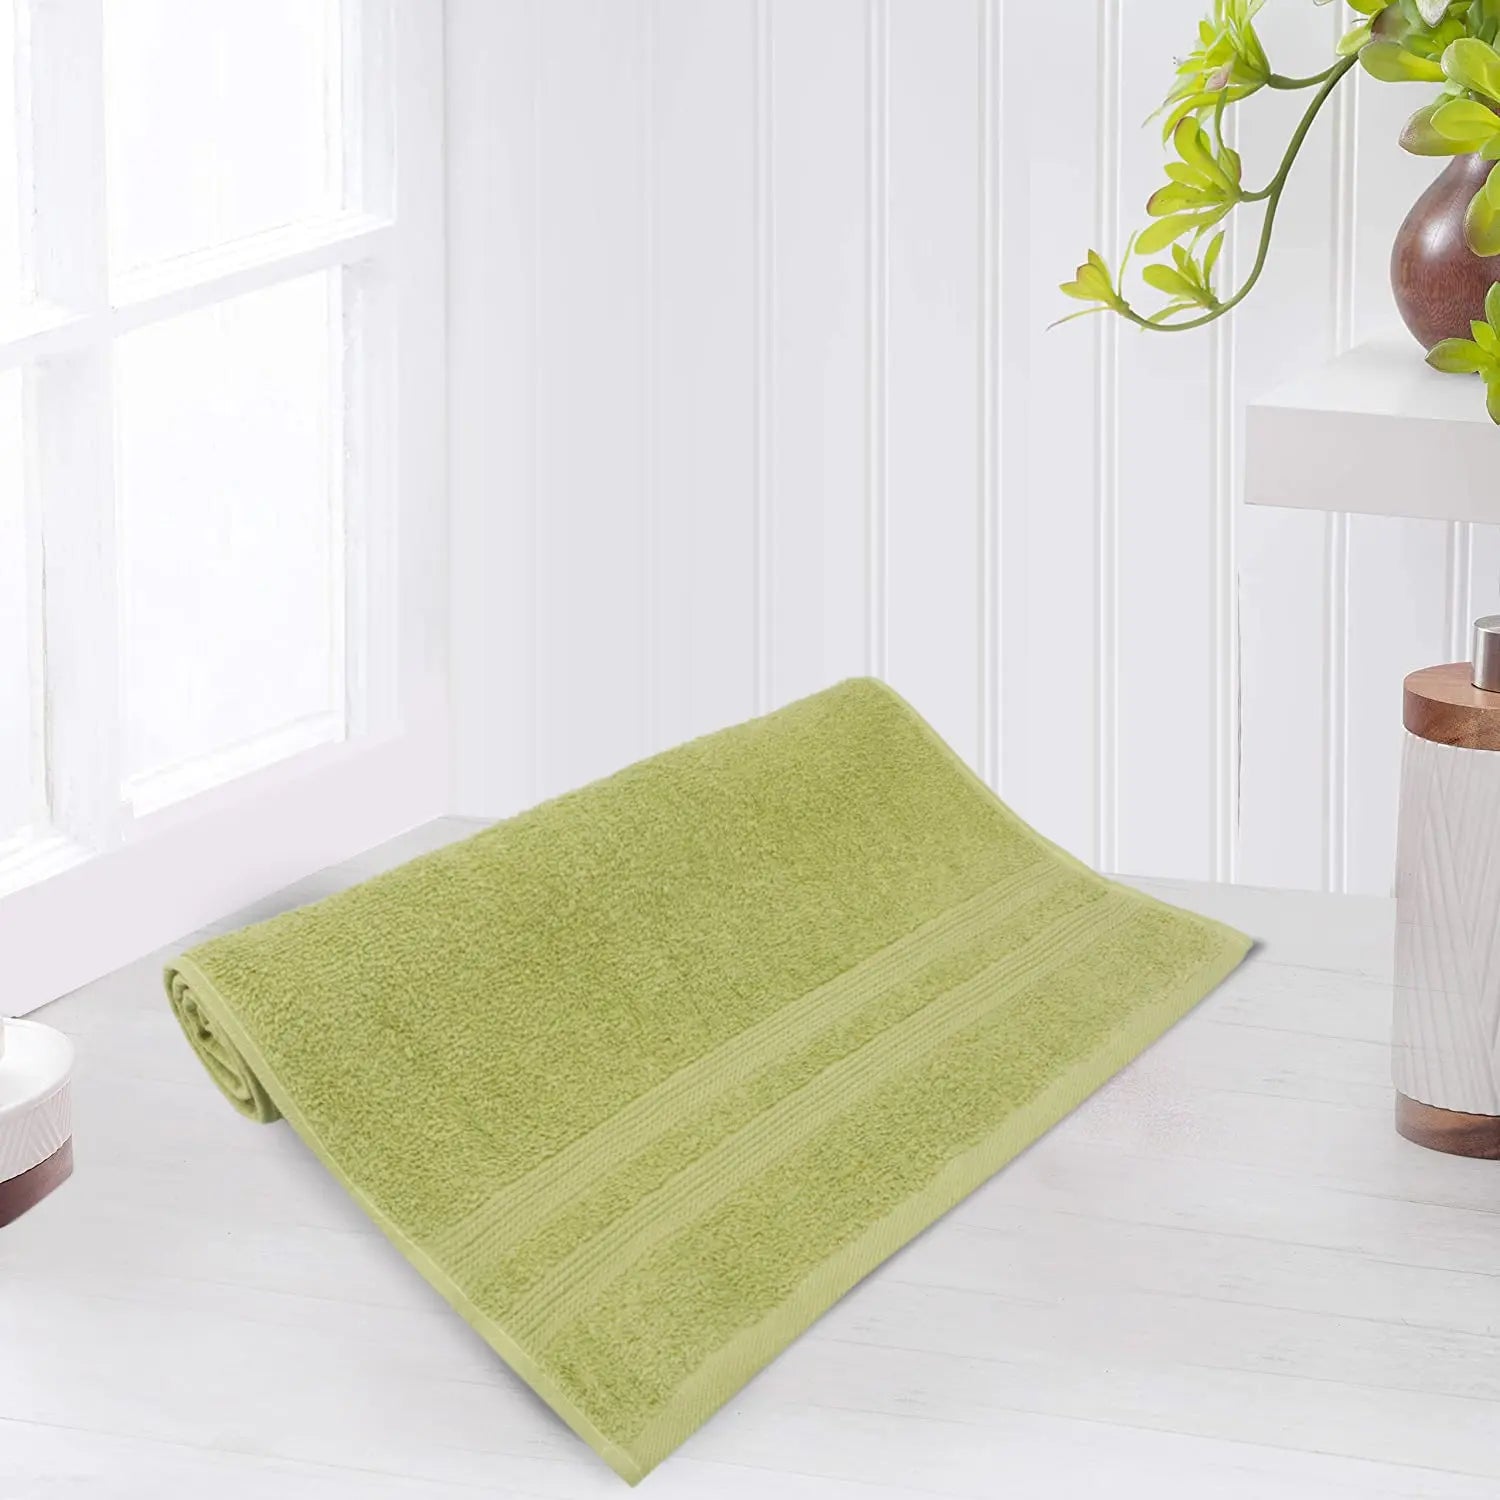 Buy Lush & Beyond Bath Towel Set of 2, 100% Cotton Towel for Men